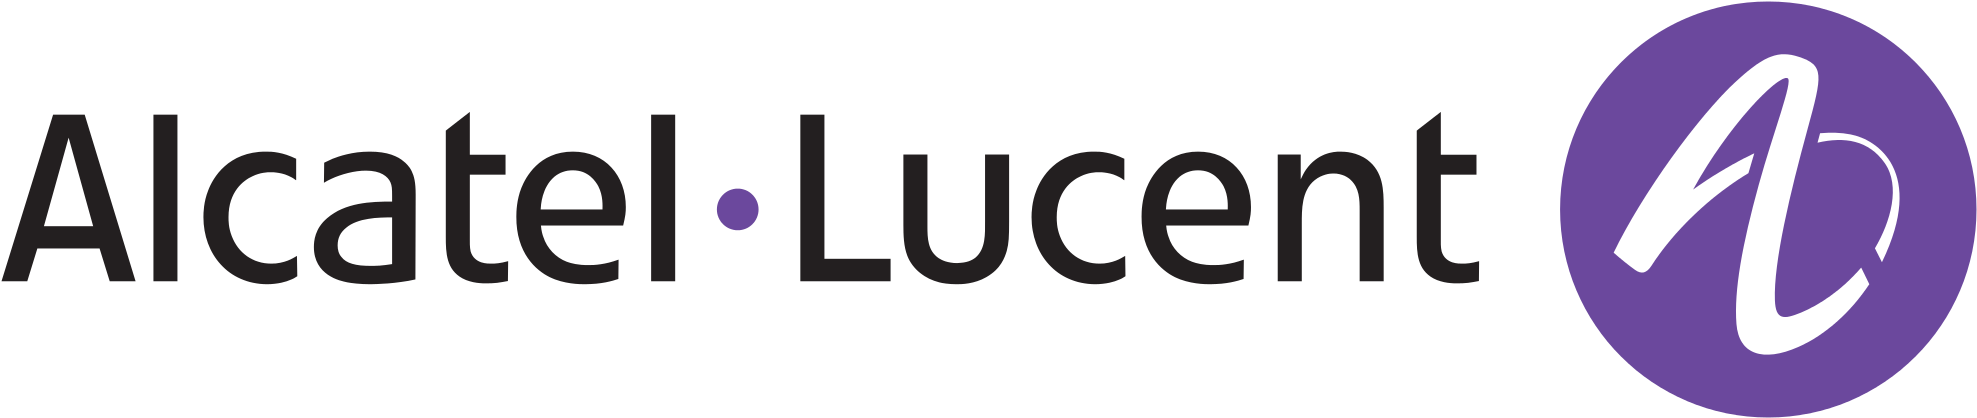 Alcatel-lucent Logo - Svg - Alcatel Submarine Networks Logo (2268x880), Png Download